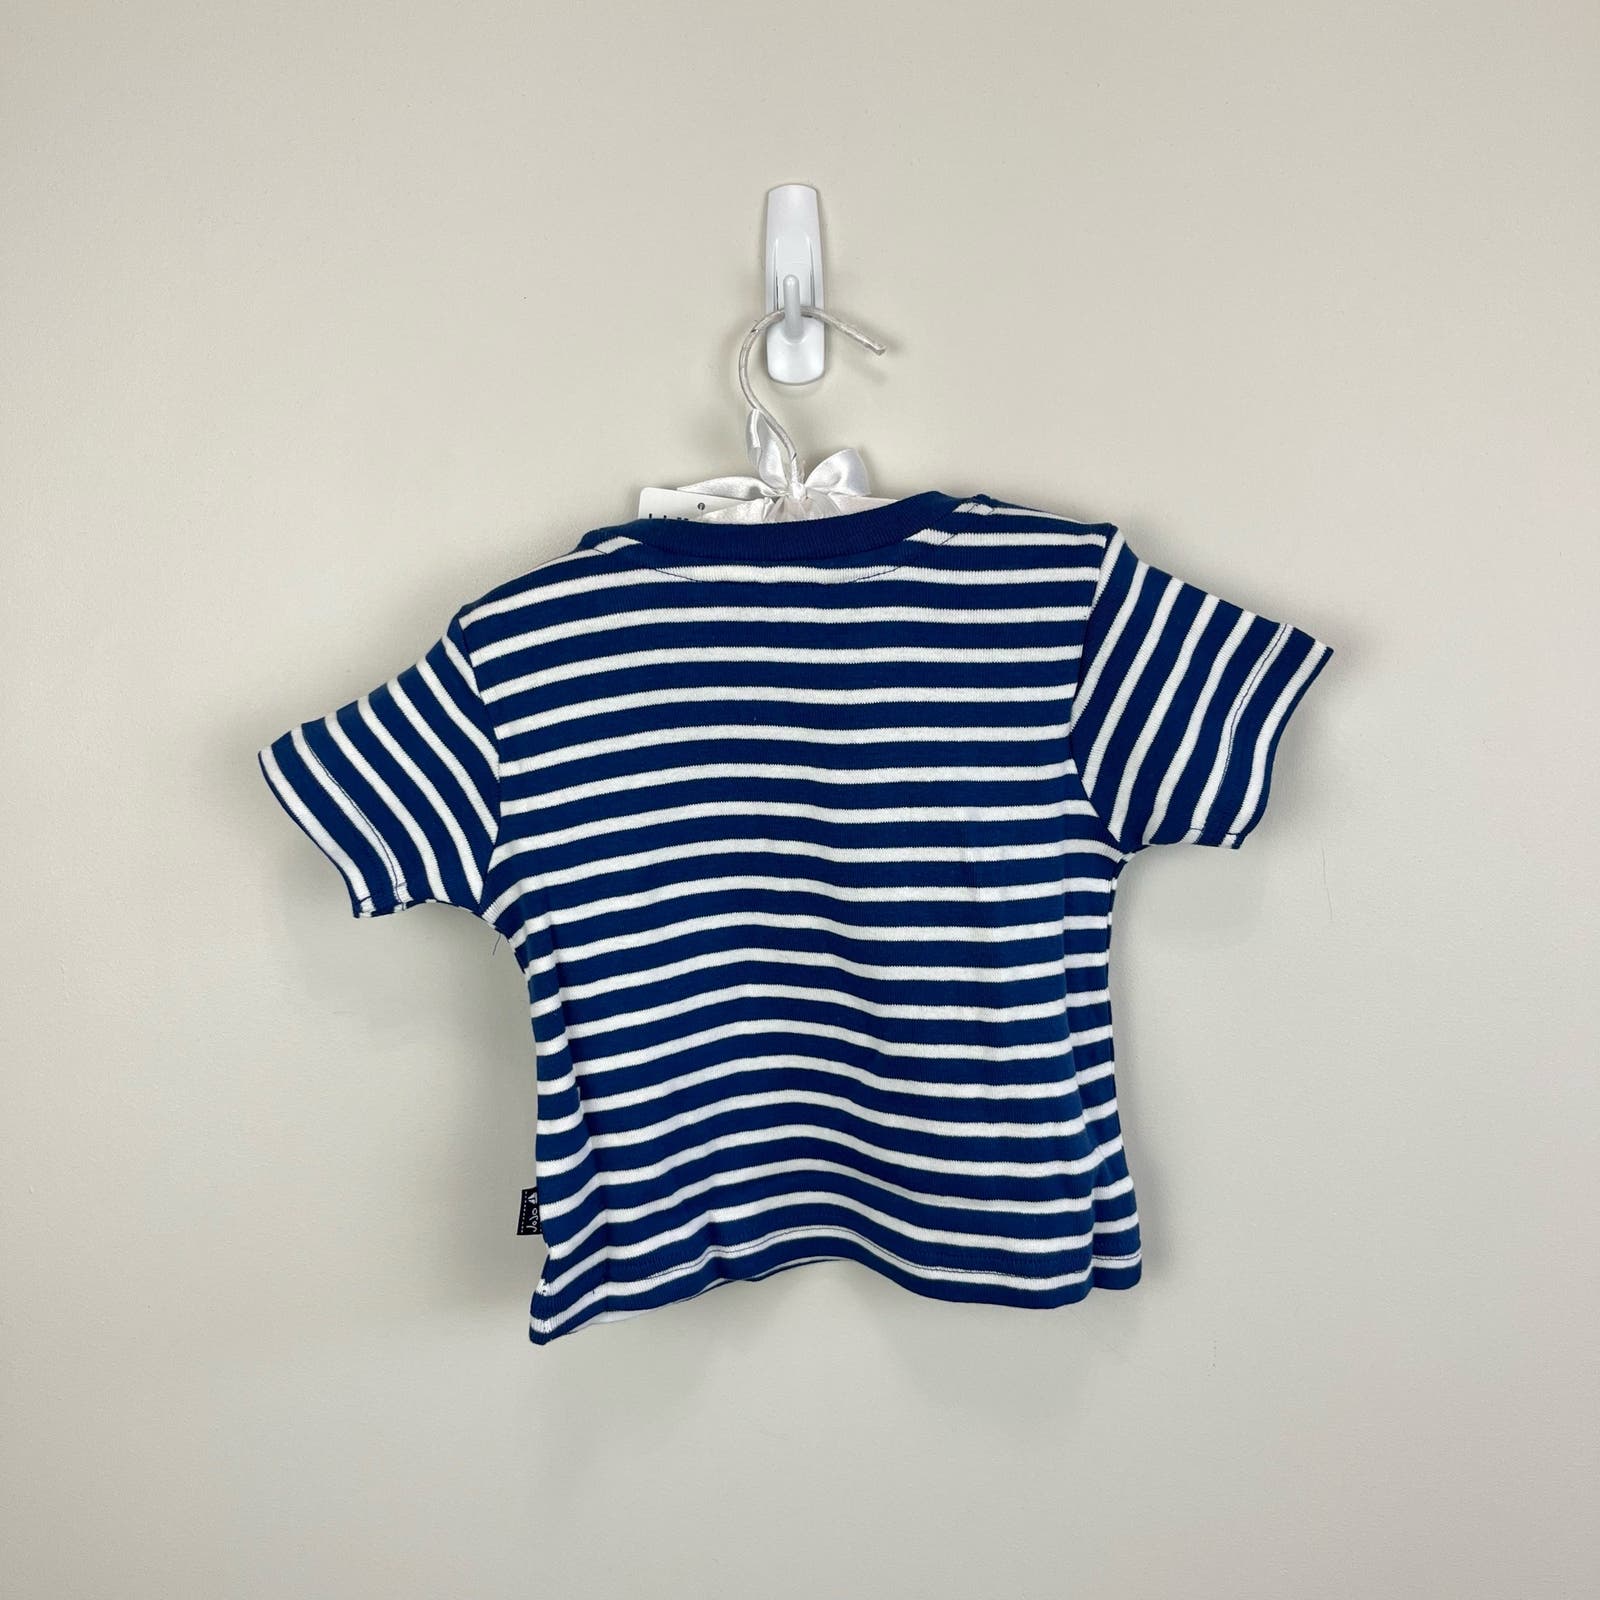 JoJo Maman Bebe Stripe T-Shirt 6-12 Months NWT